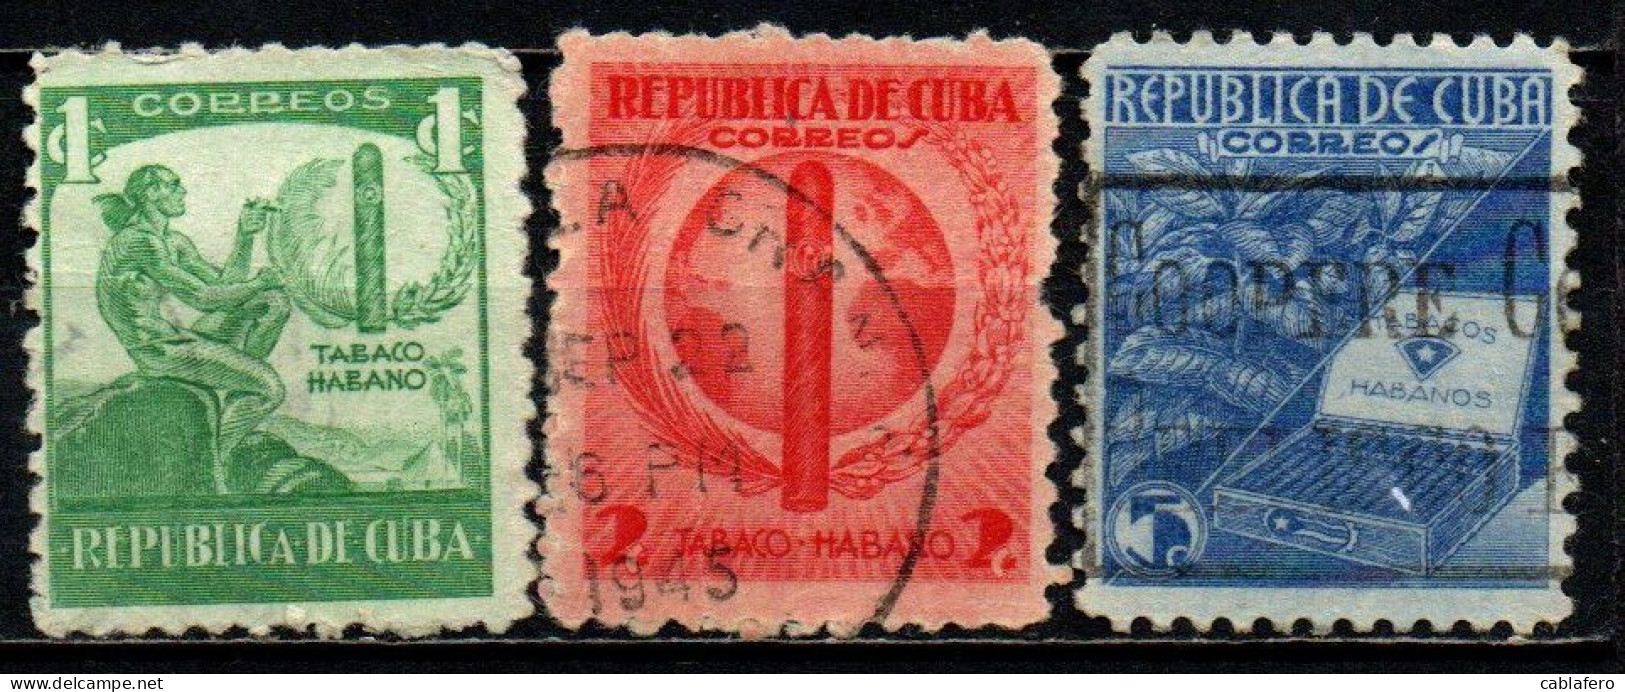 CUBA - 1939 - INDIANO D'AMERICA, SIGARO CUBANO, PIANTA DI TABACCO E SIGARI CUBANI - USATI - Usati